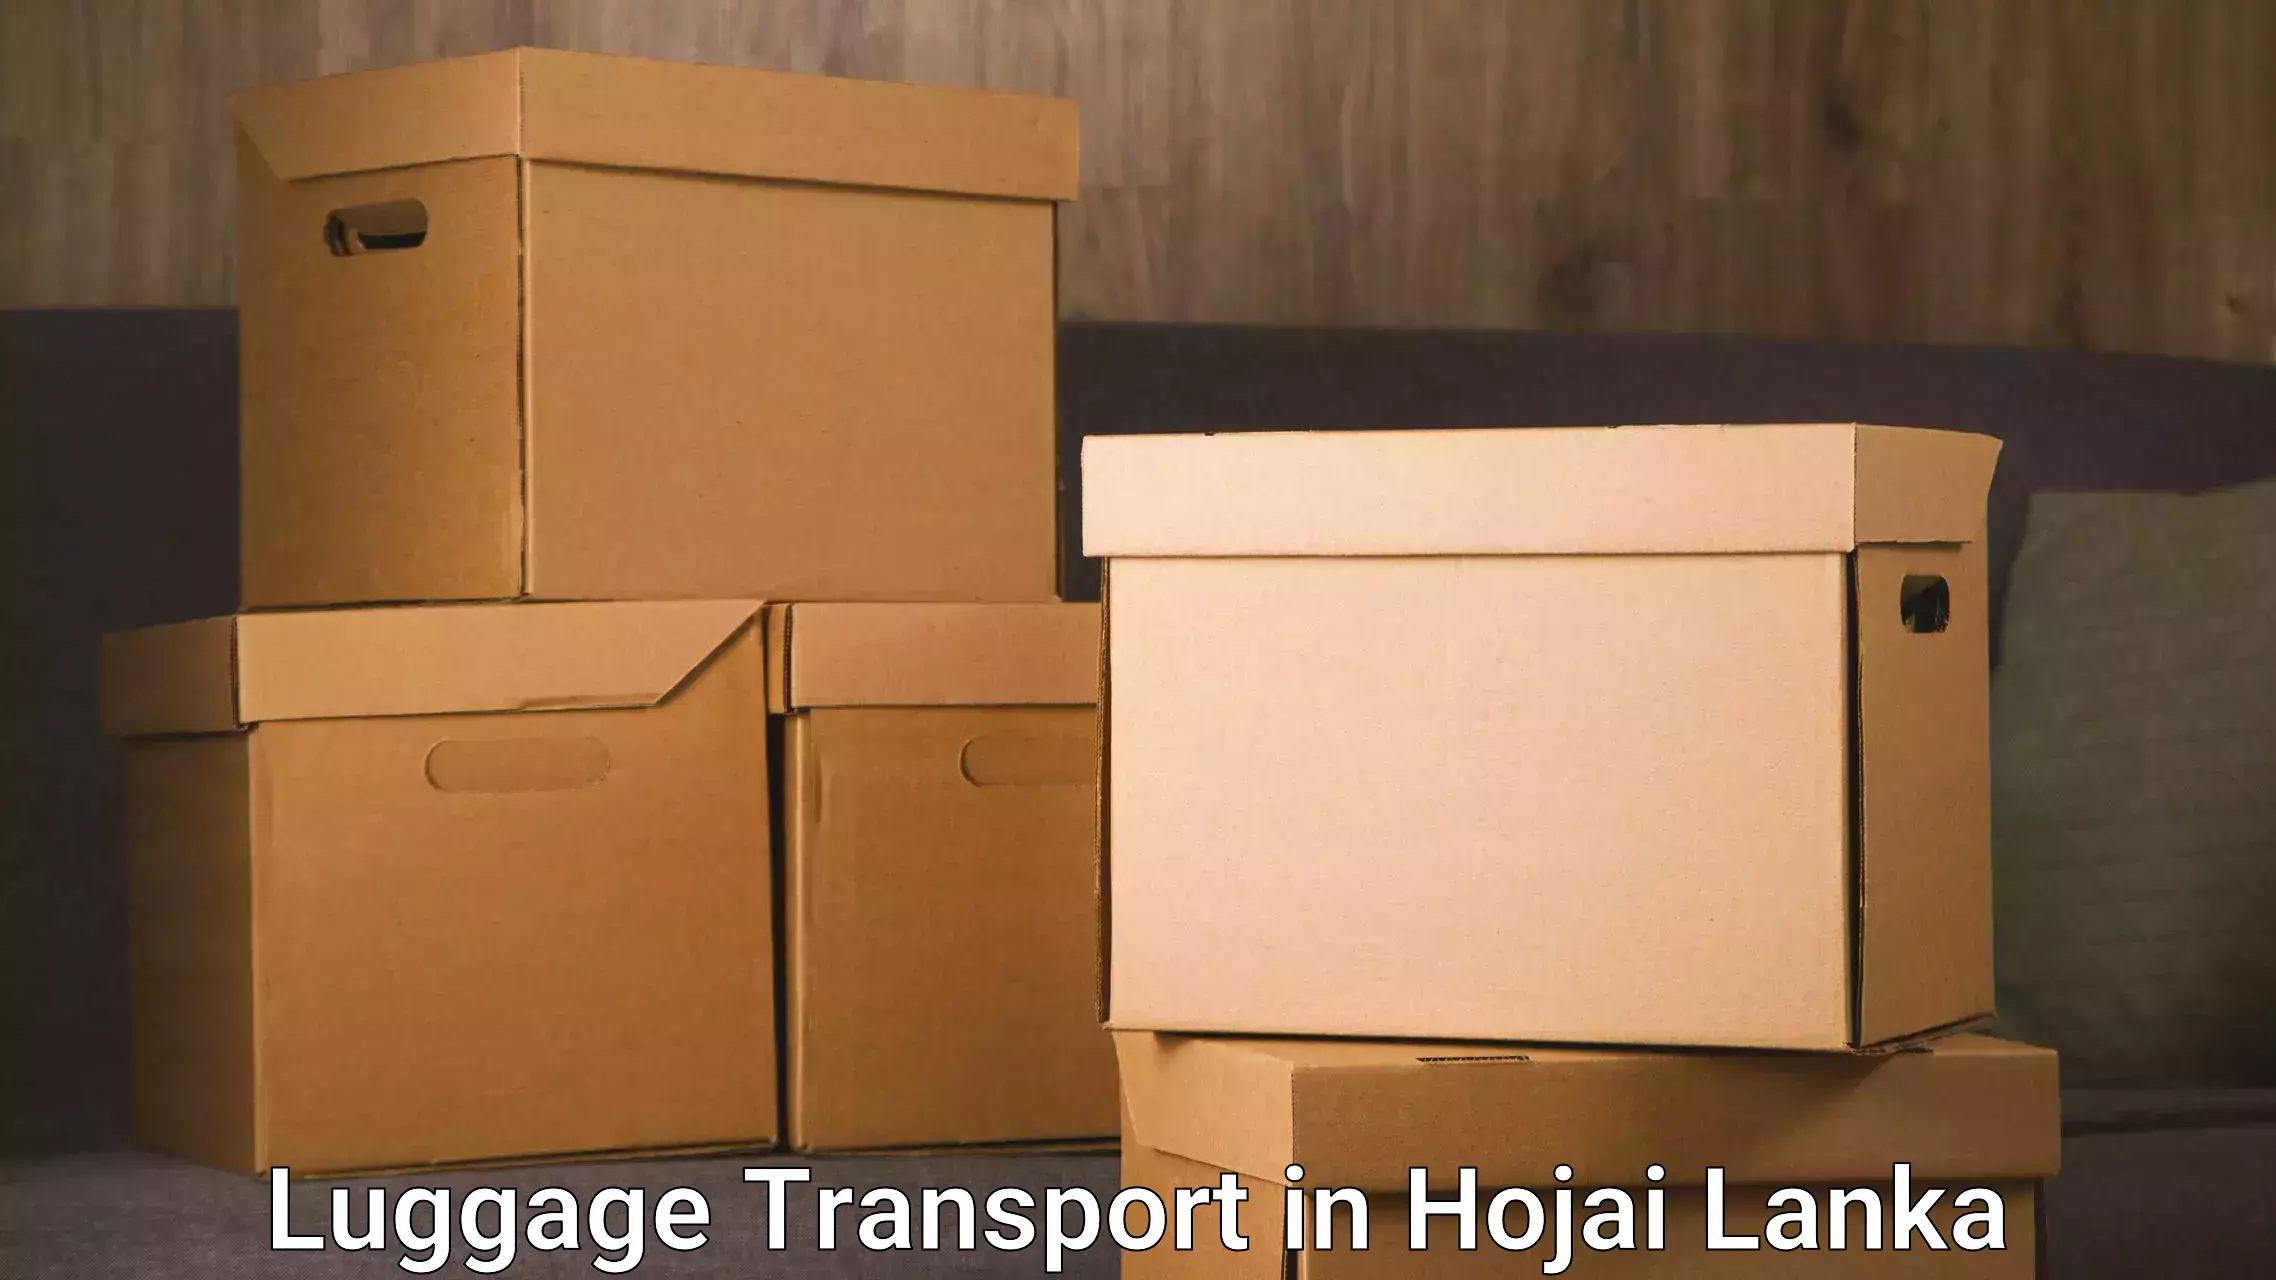 Discounted baggage transport in Hojai Lanka